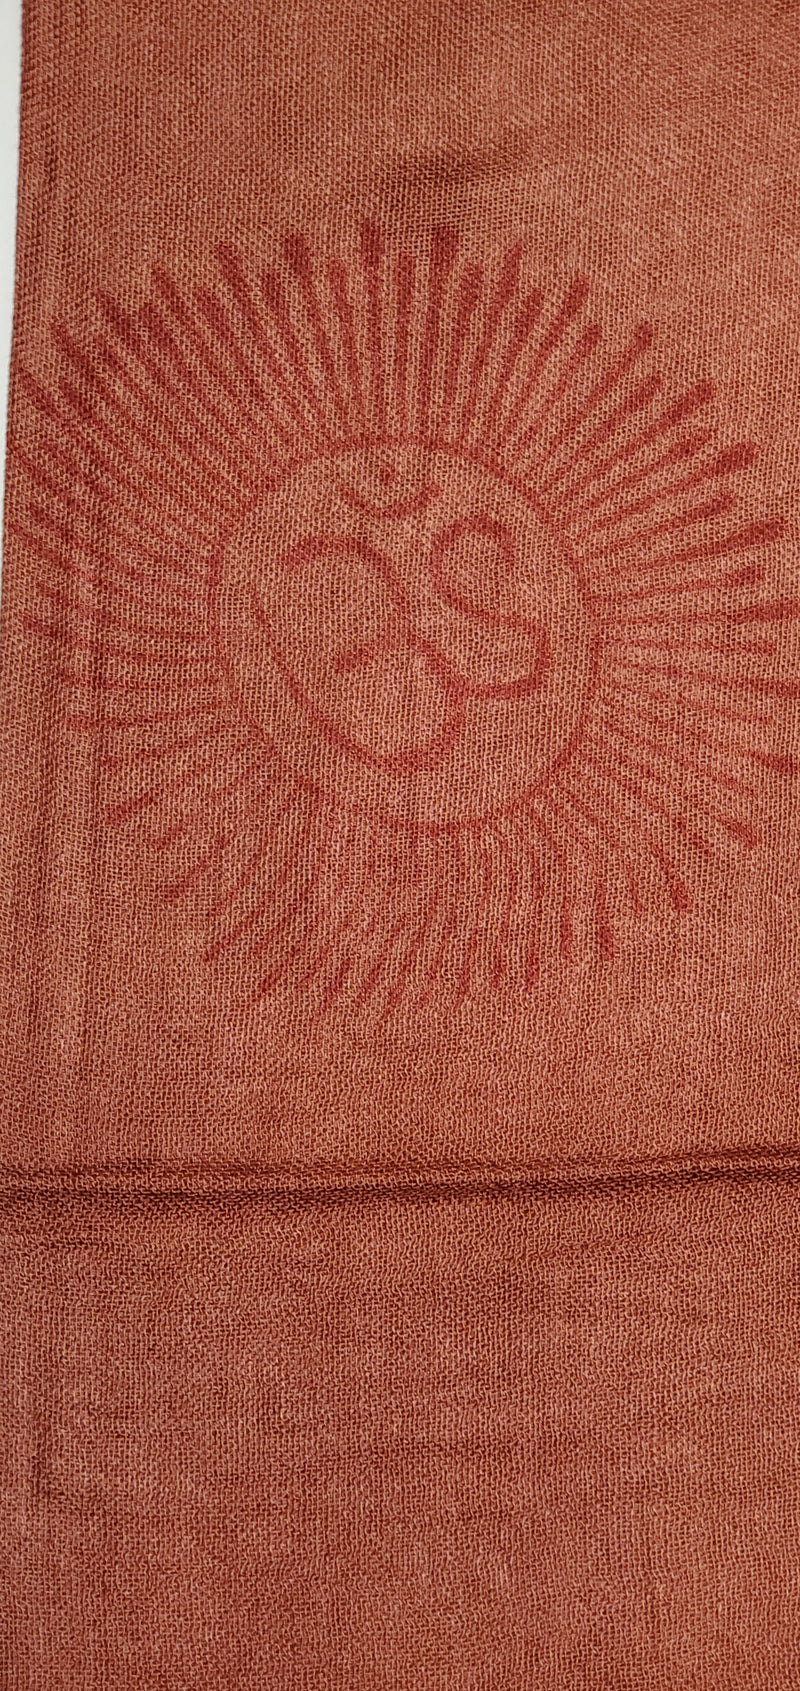 Red Primordial Om & Asian Symbols Printed Scarf